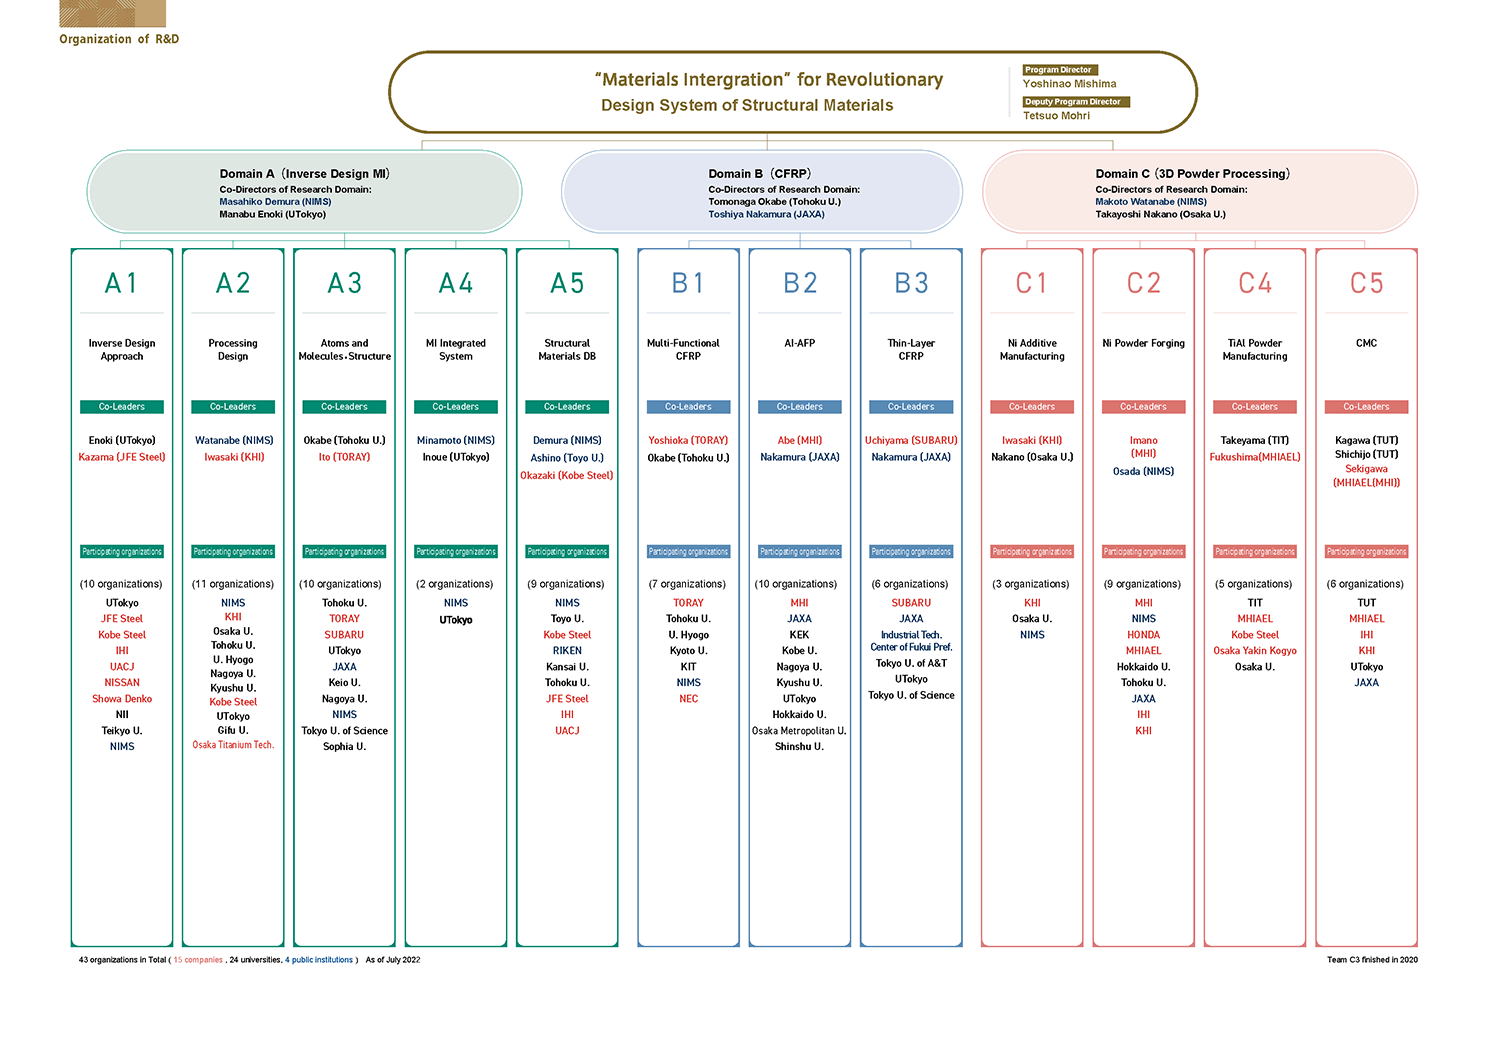 R&D organization of Each Area